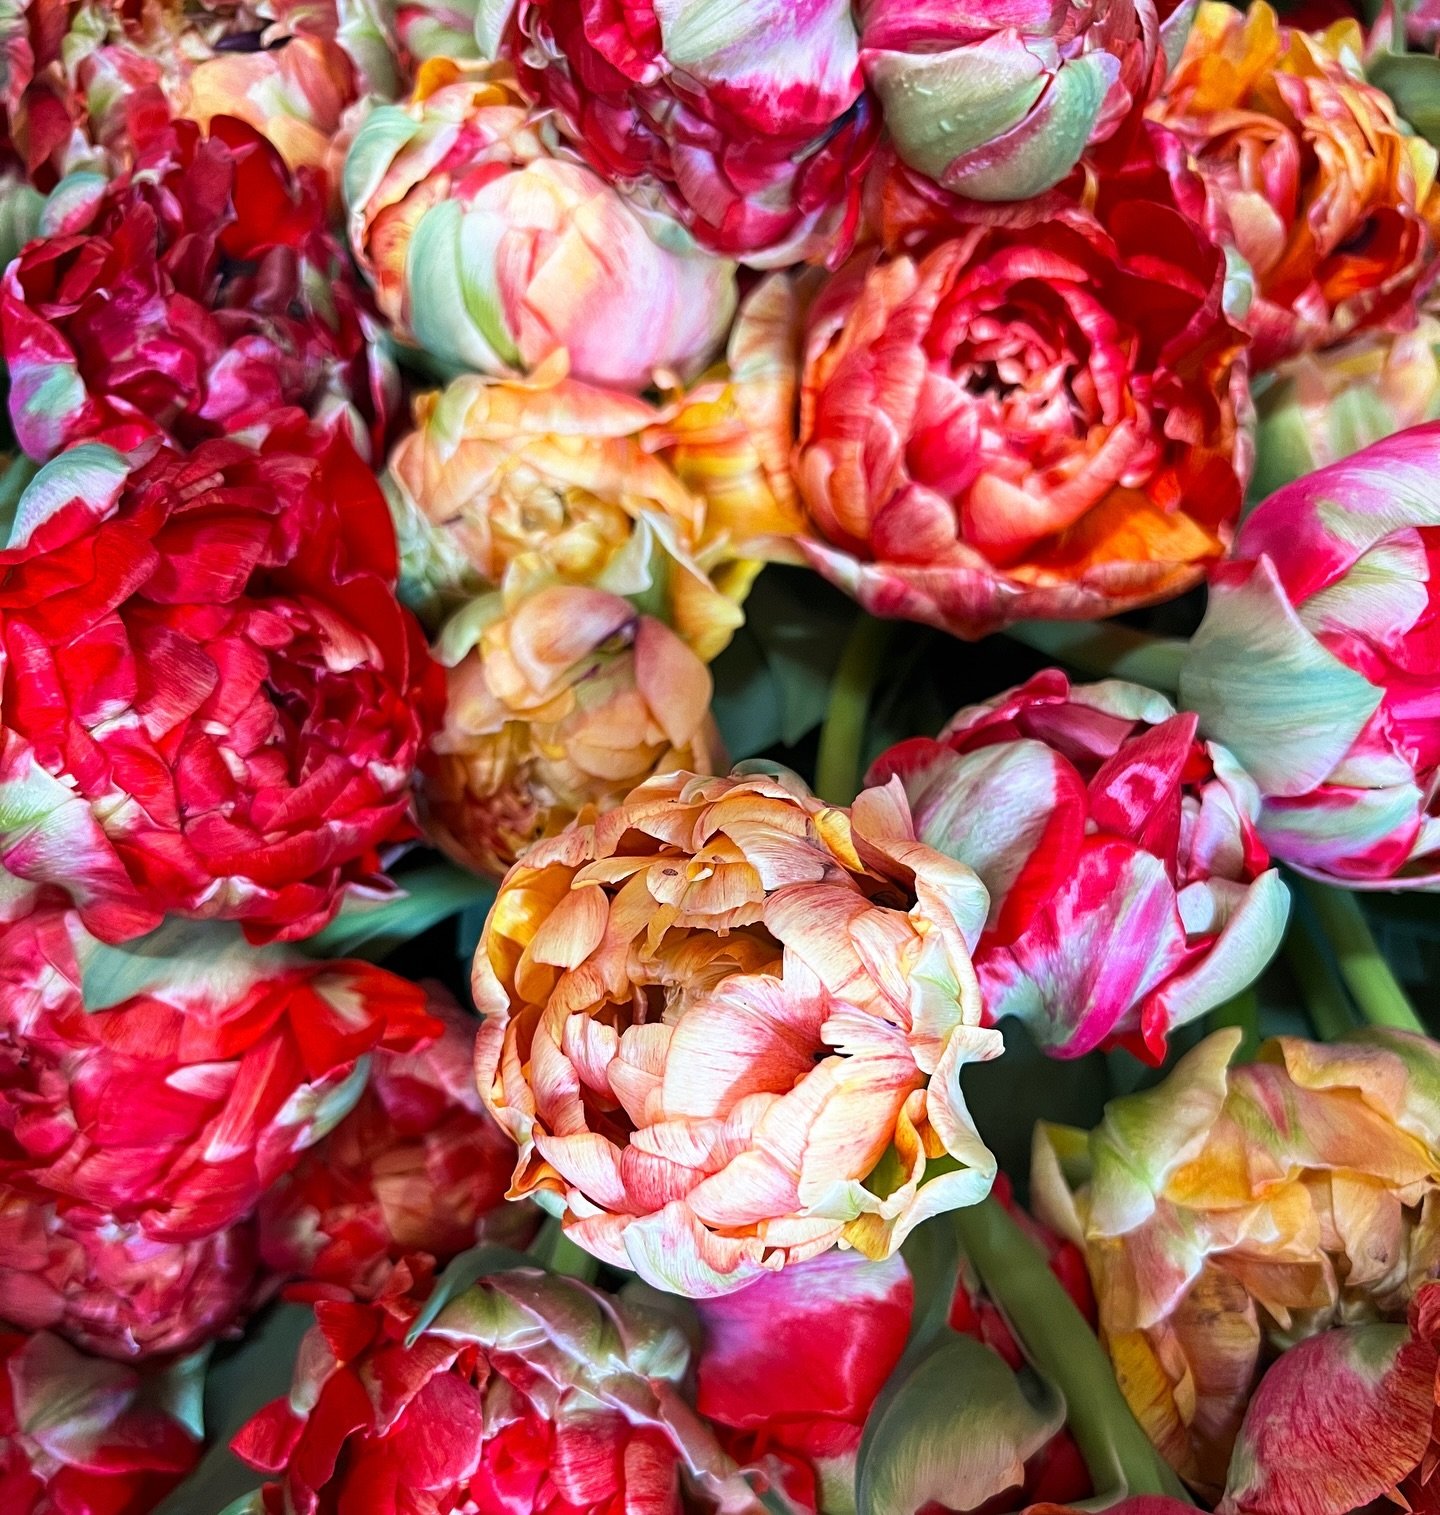 Gudoshnik double tulips are the colors of Ranier cherries.
.
.
.
#tulips #tulipseason #springflowers #mayfieldfarm #mayfieldfarmwv #morgantownflowerfarm #flowerfarm #flowerfarmer #womenwhofarm #farmher #womeninag #buylocal #localflowers #morgantownwv